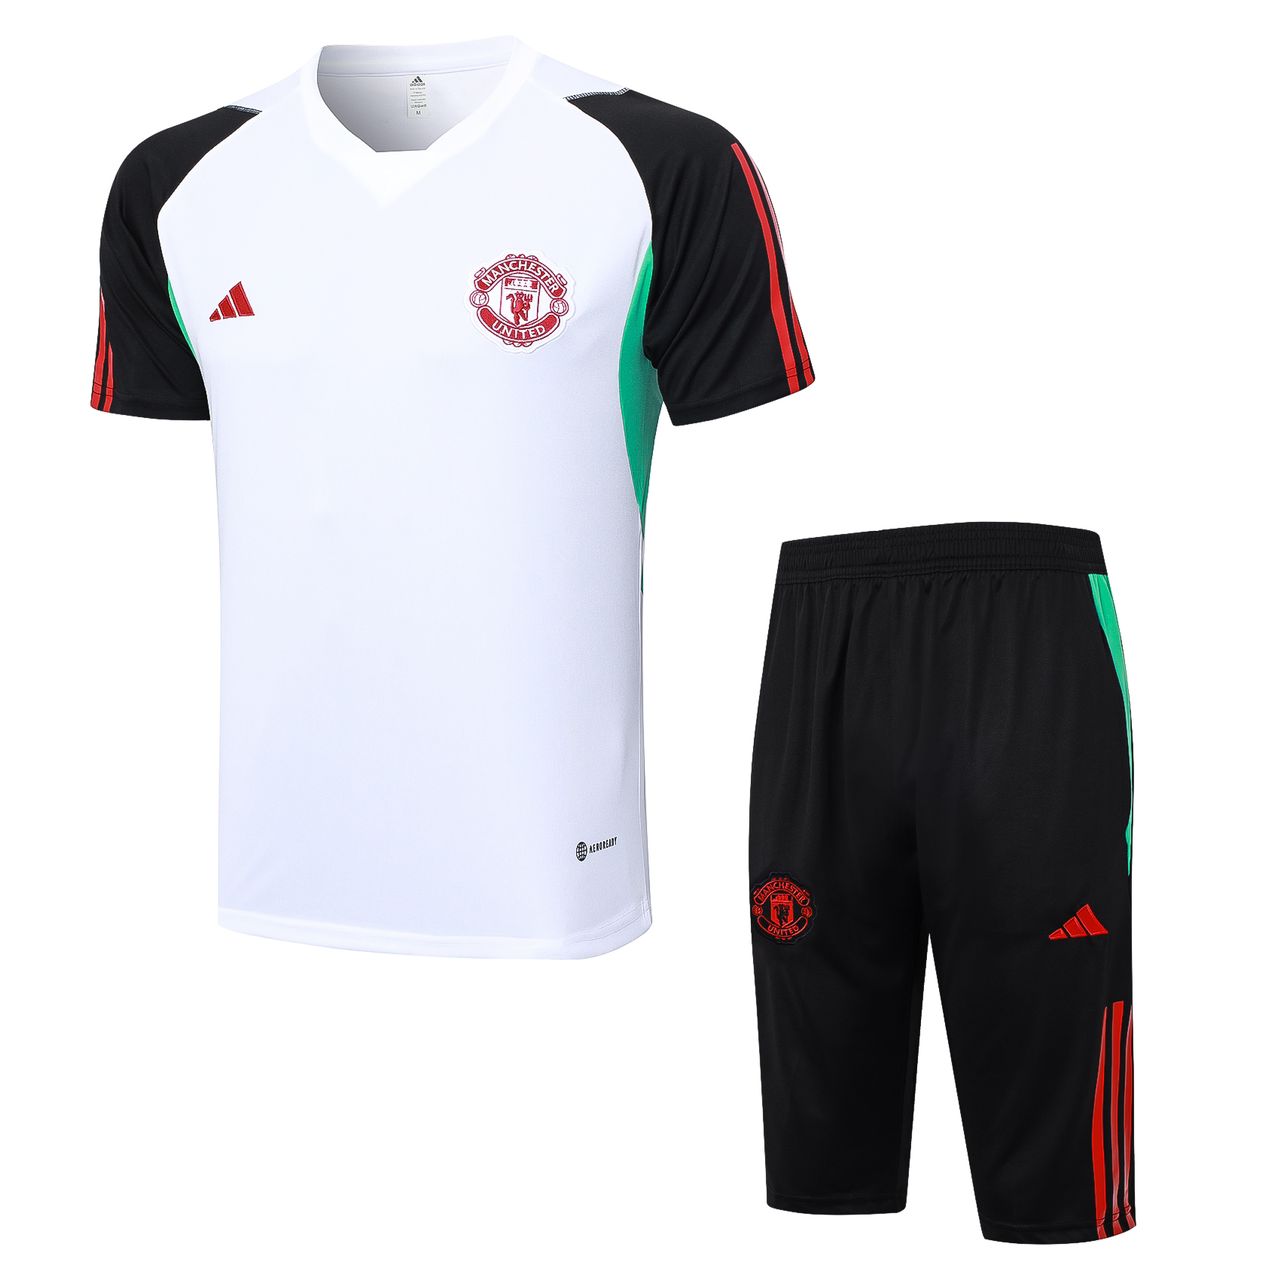 Manchester united training kits-white